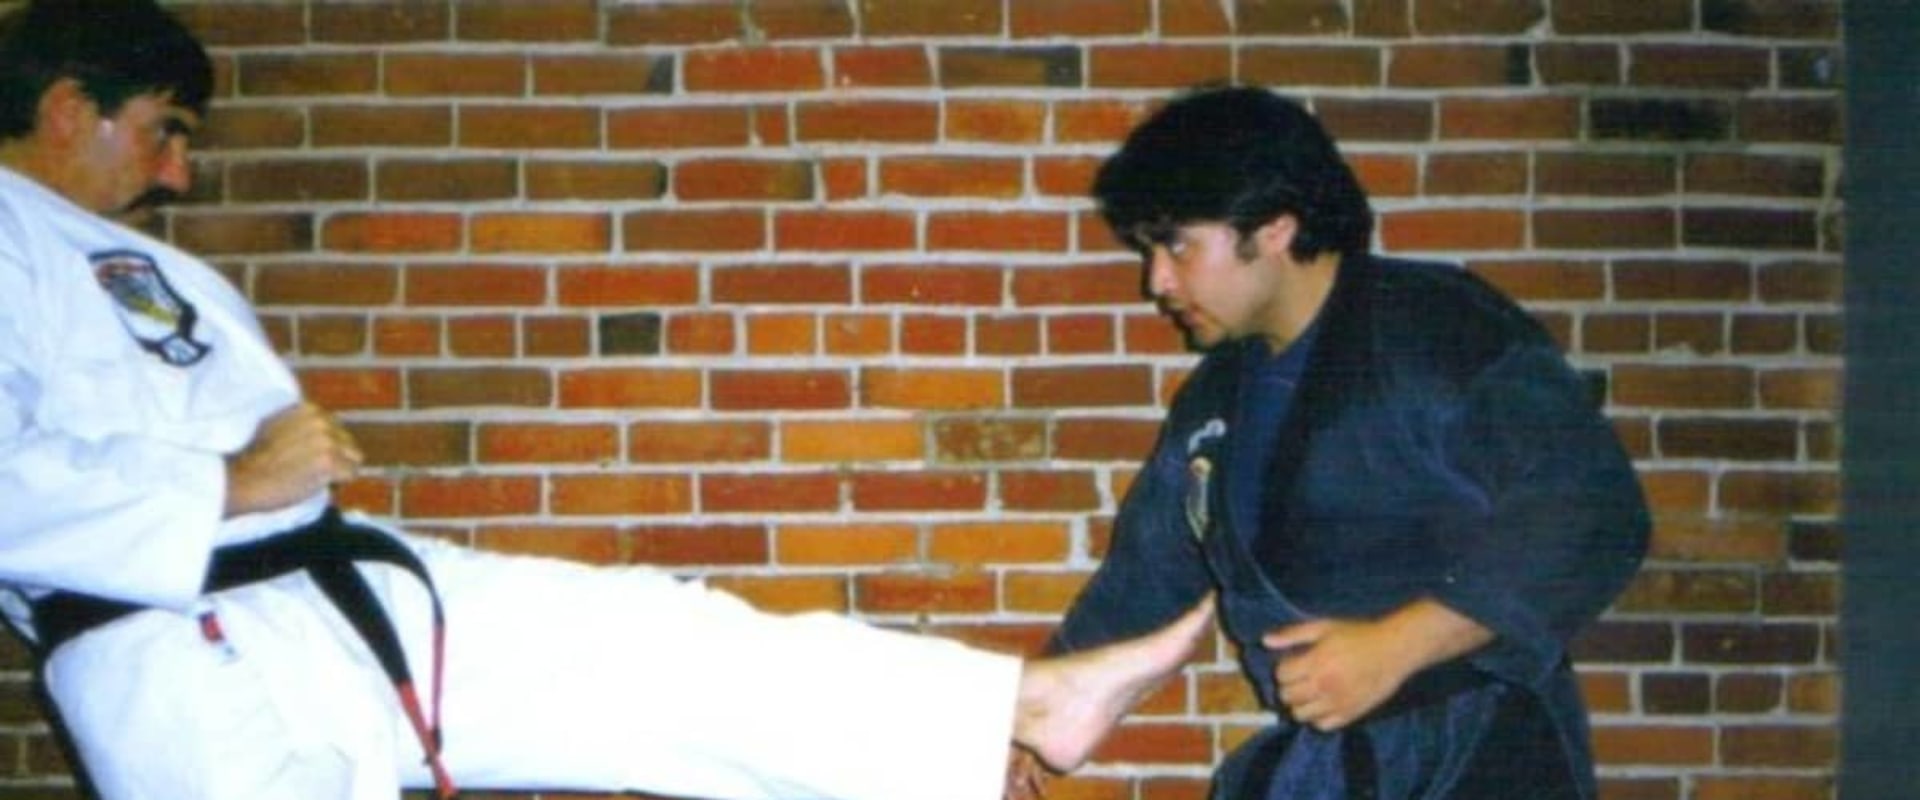 Striking Techniques in Martial Arts Classes